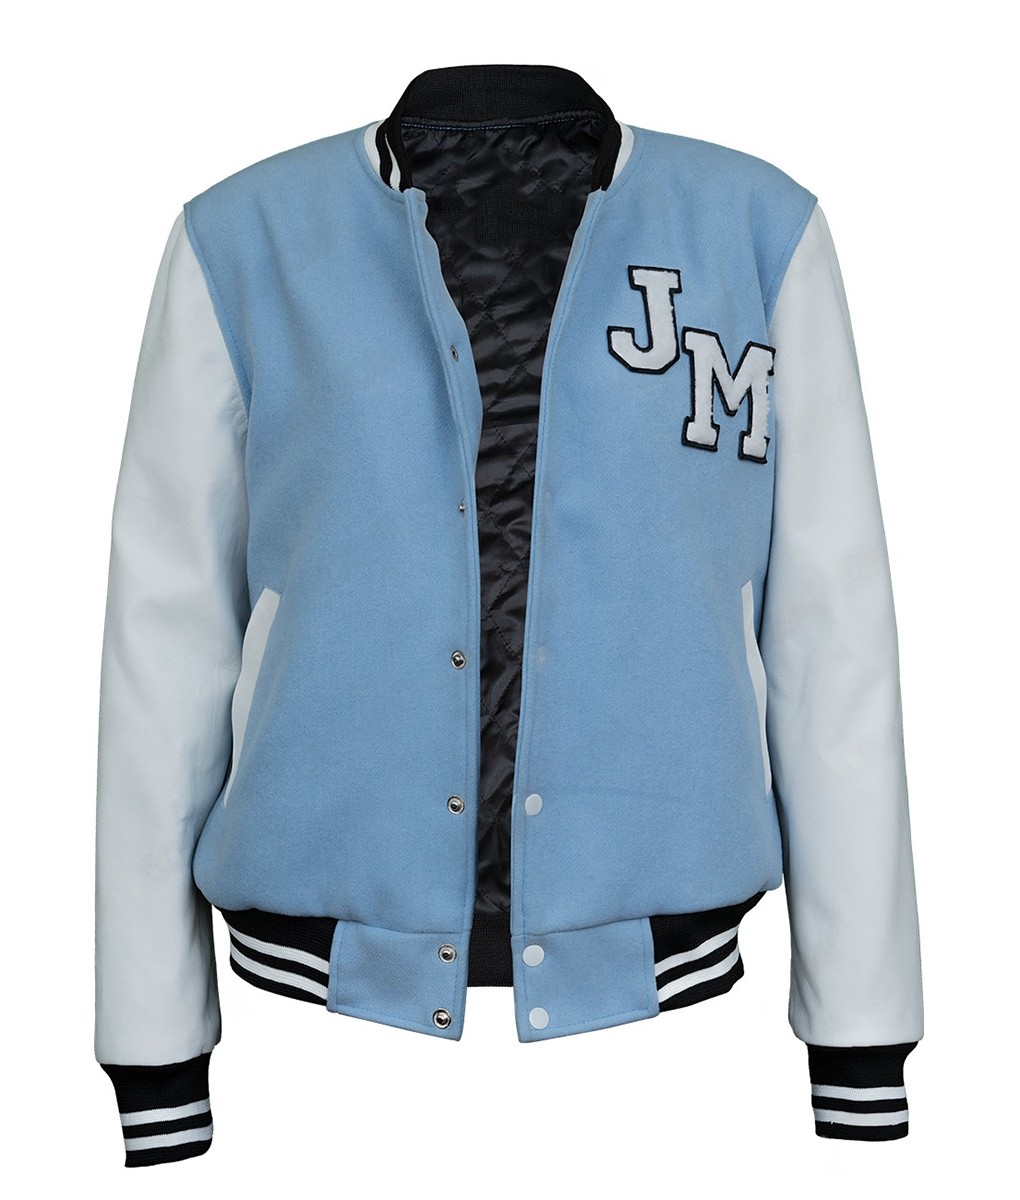 Janelle Monae All-Star Game Varsity Jacket